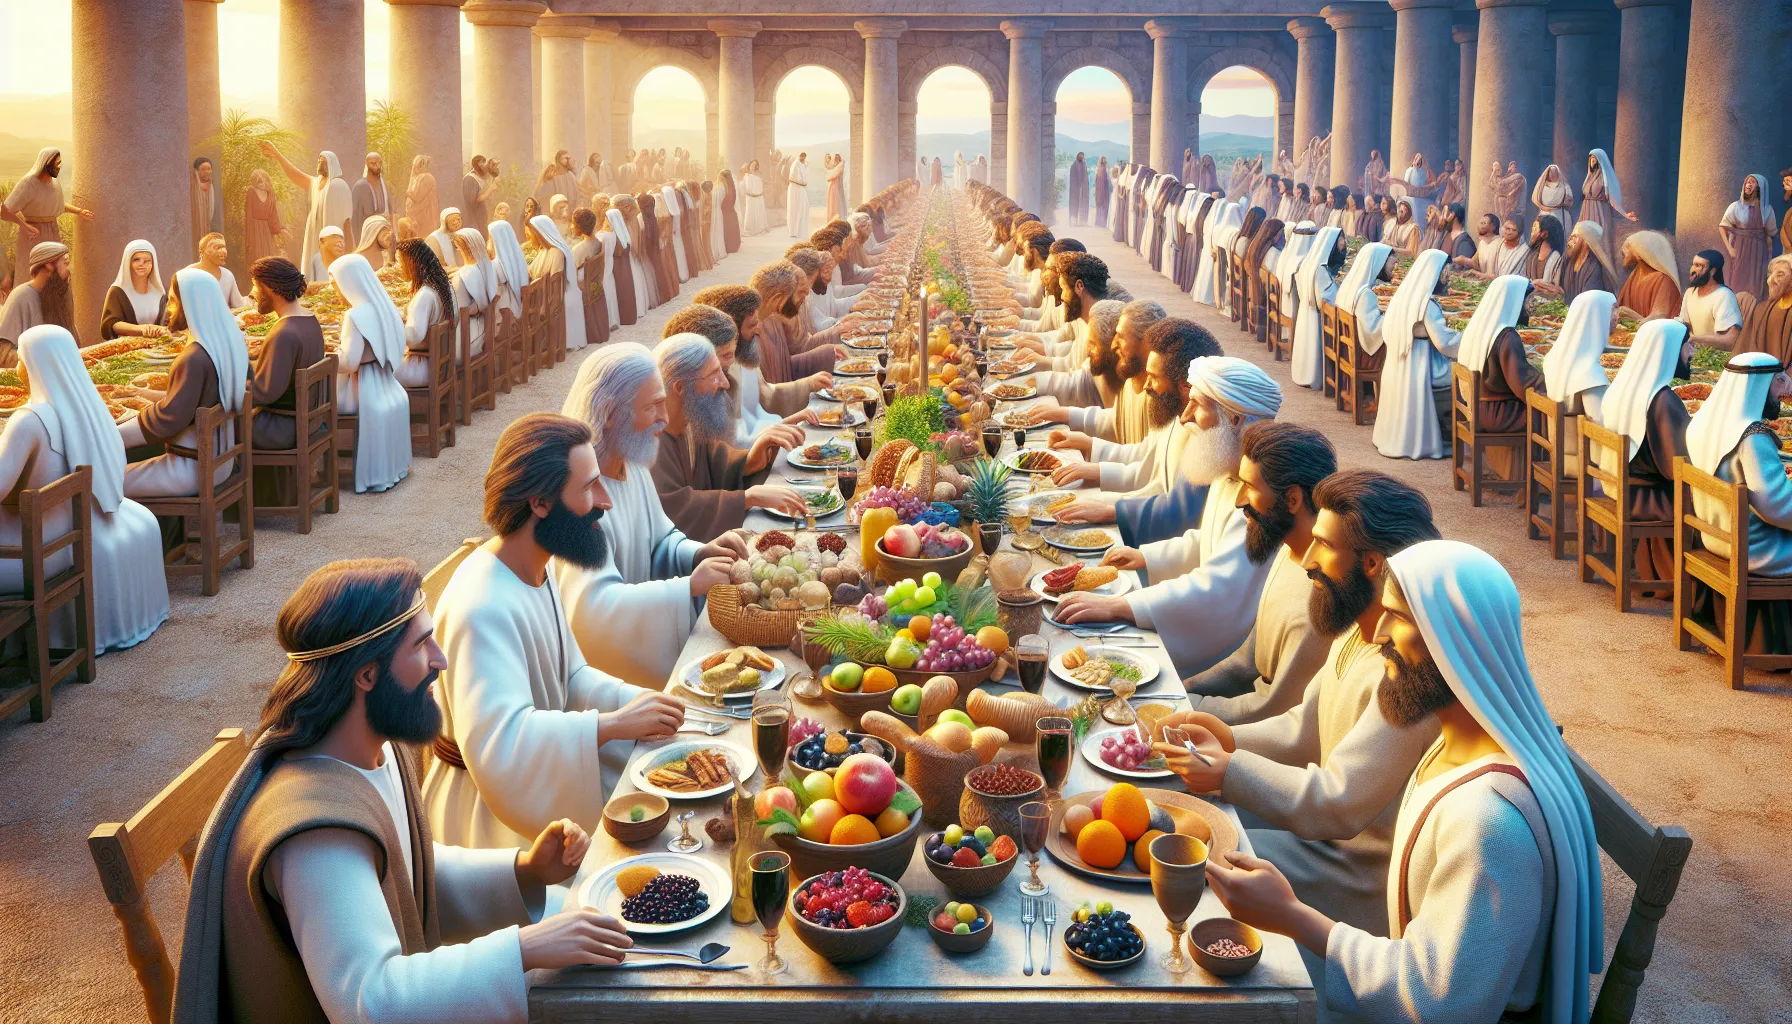 Imagen ilustrativa de la cena de bodas descrita en la Biblia